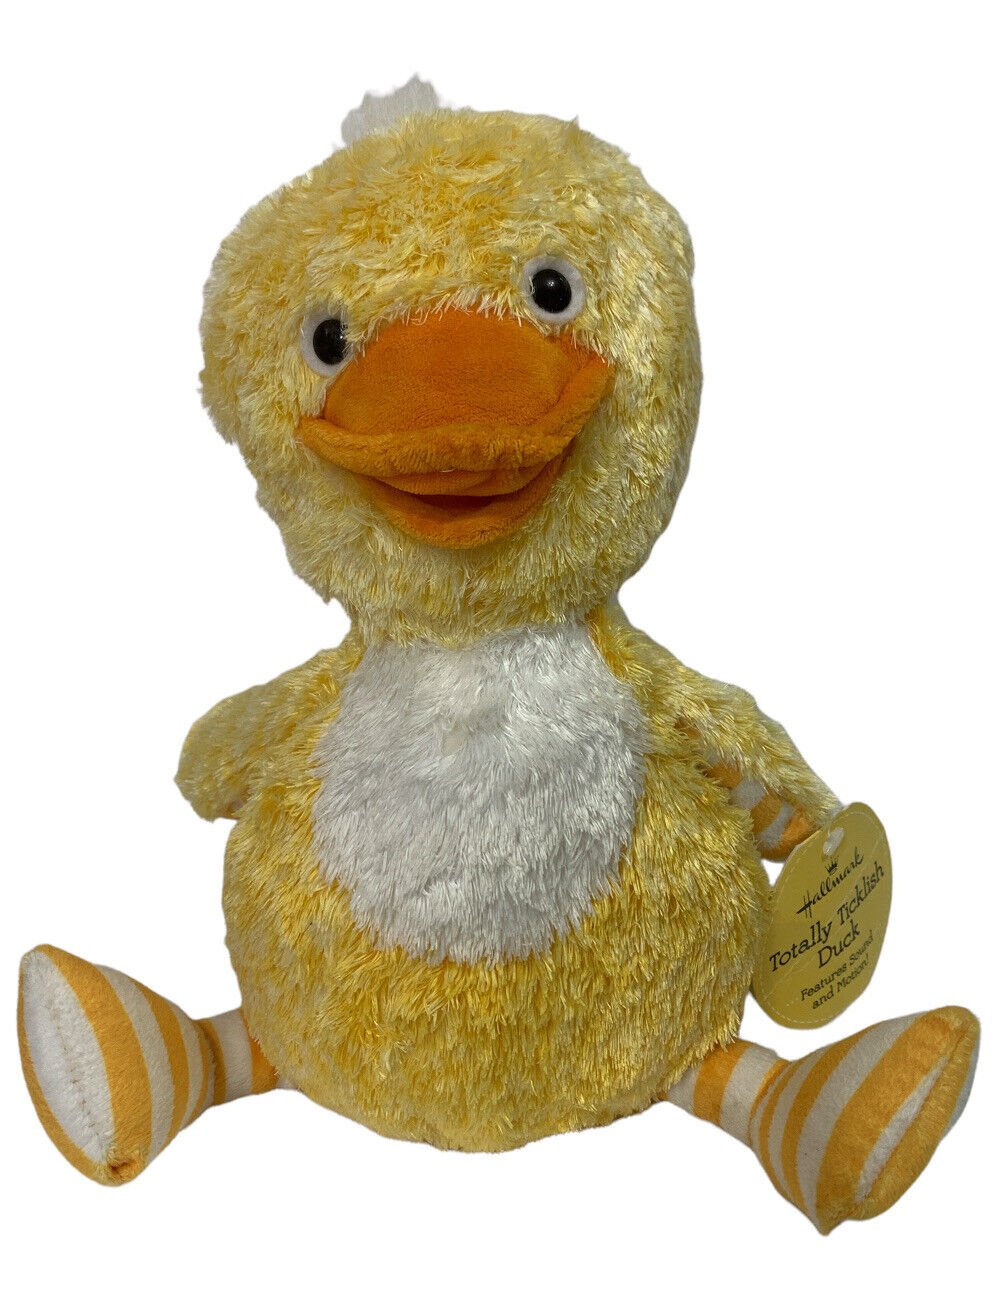 Totally Ticklish Sing & Laugh Duck Stuffed Animal Plush, 10.5"H